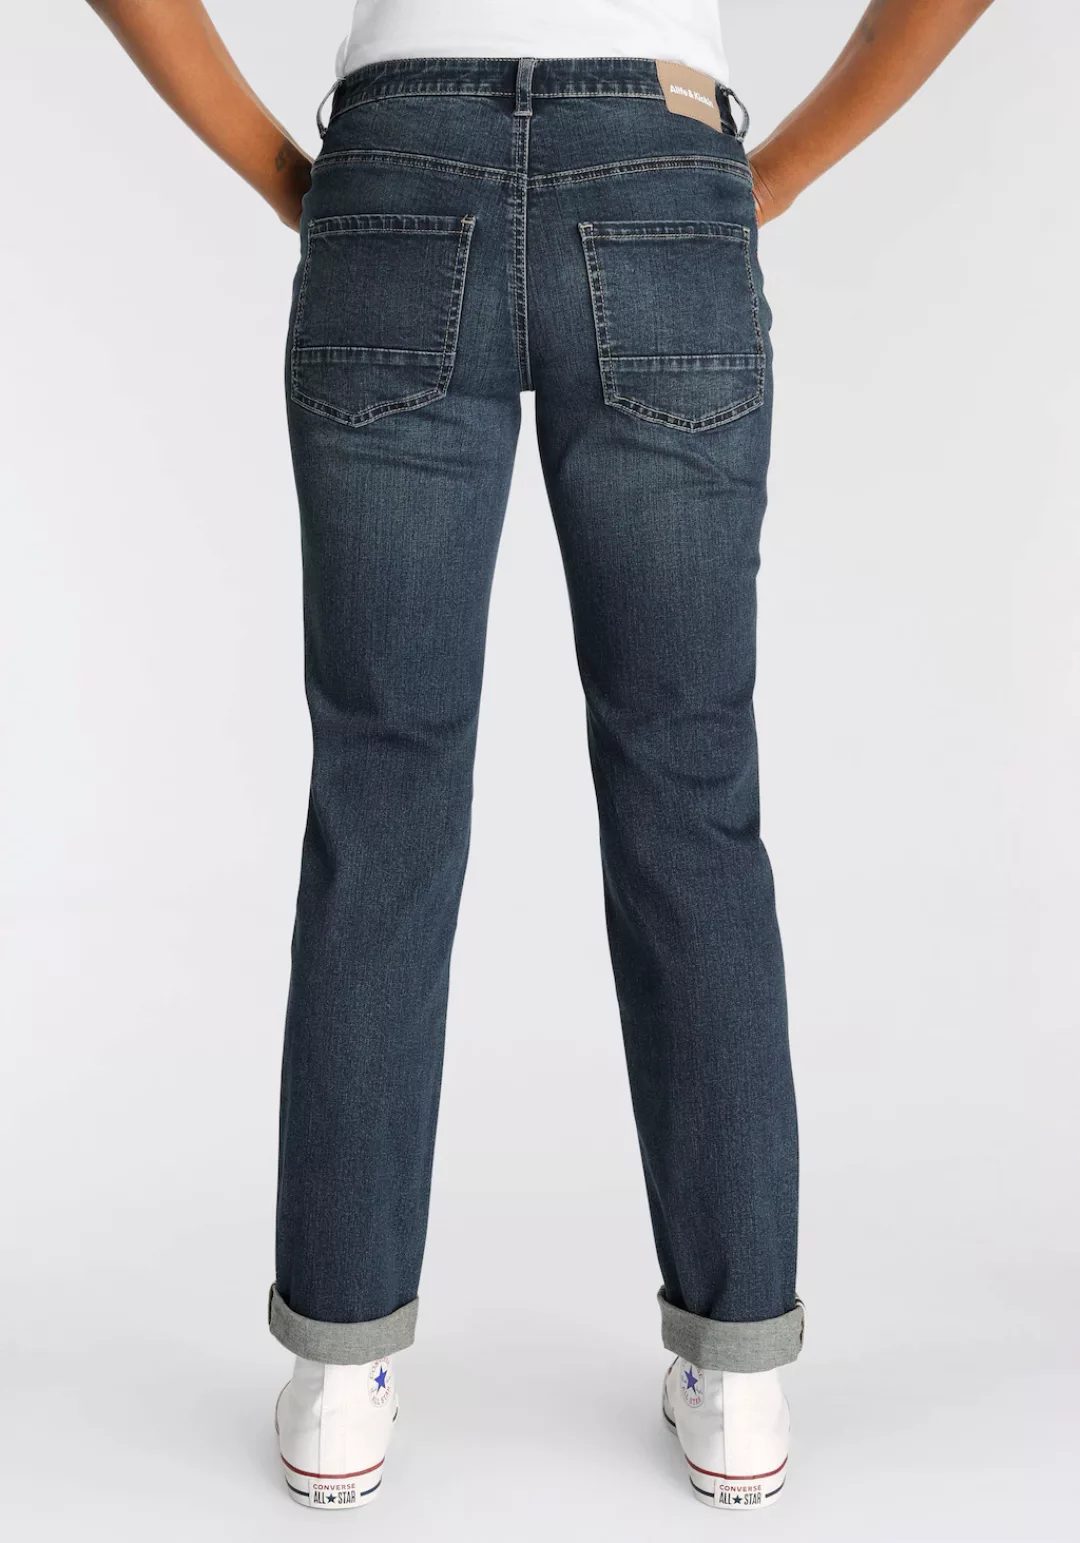 Alife & Kickin Low-rise-Jeans "Straight-Fit AileenAK", NEUE KOLLEKTION günstig online kaufen